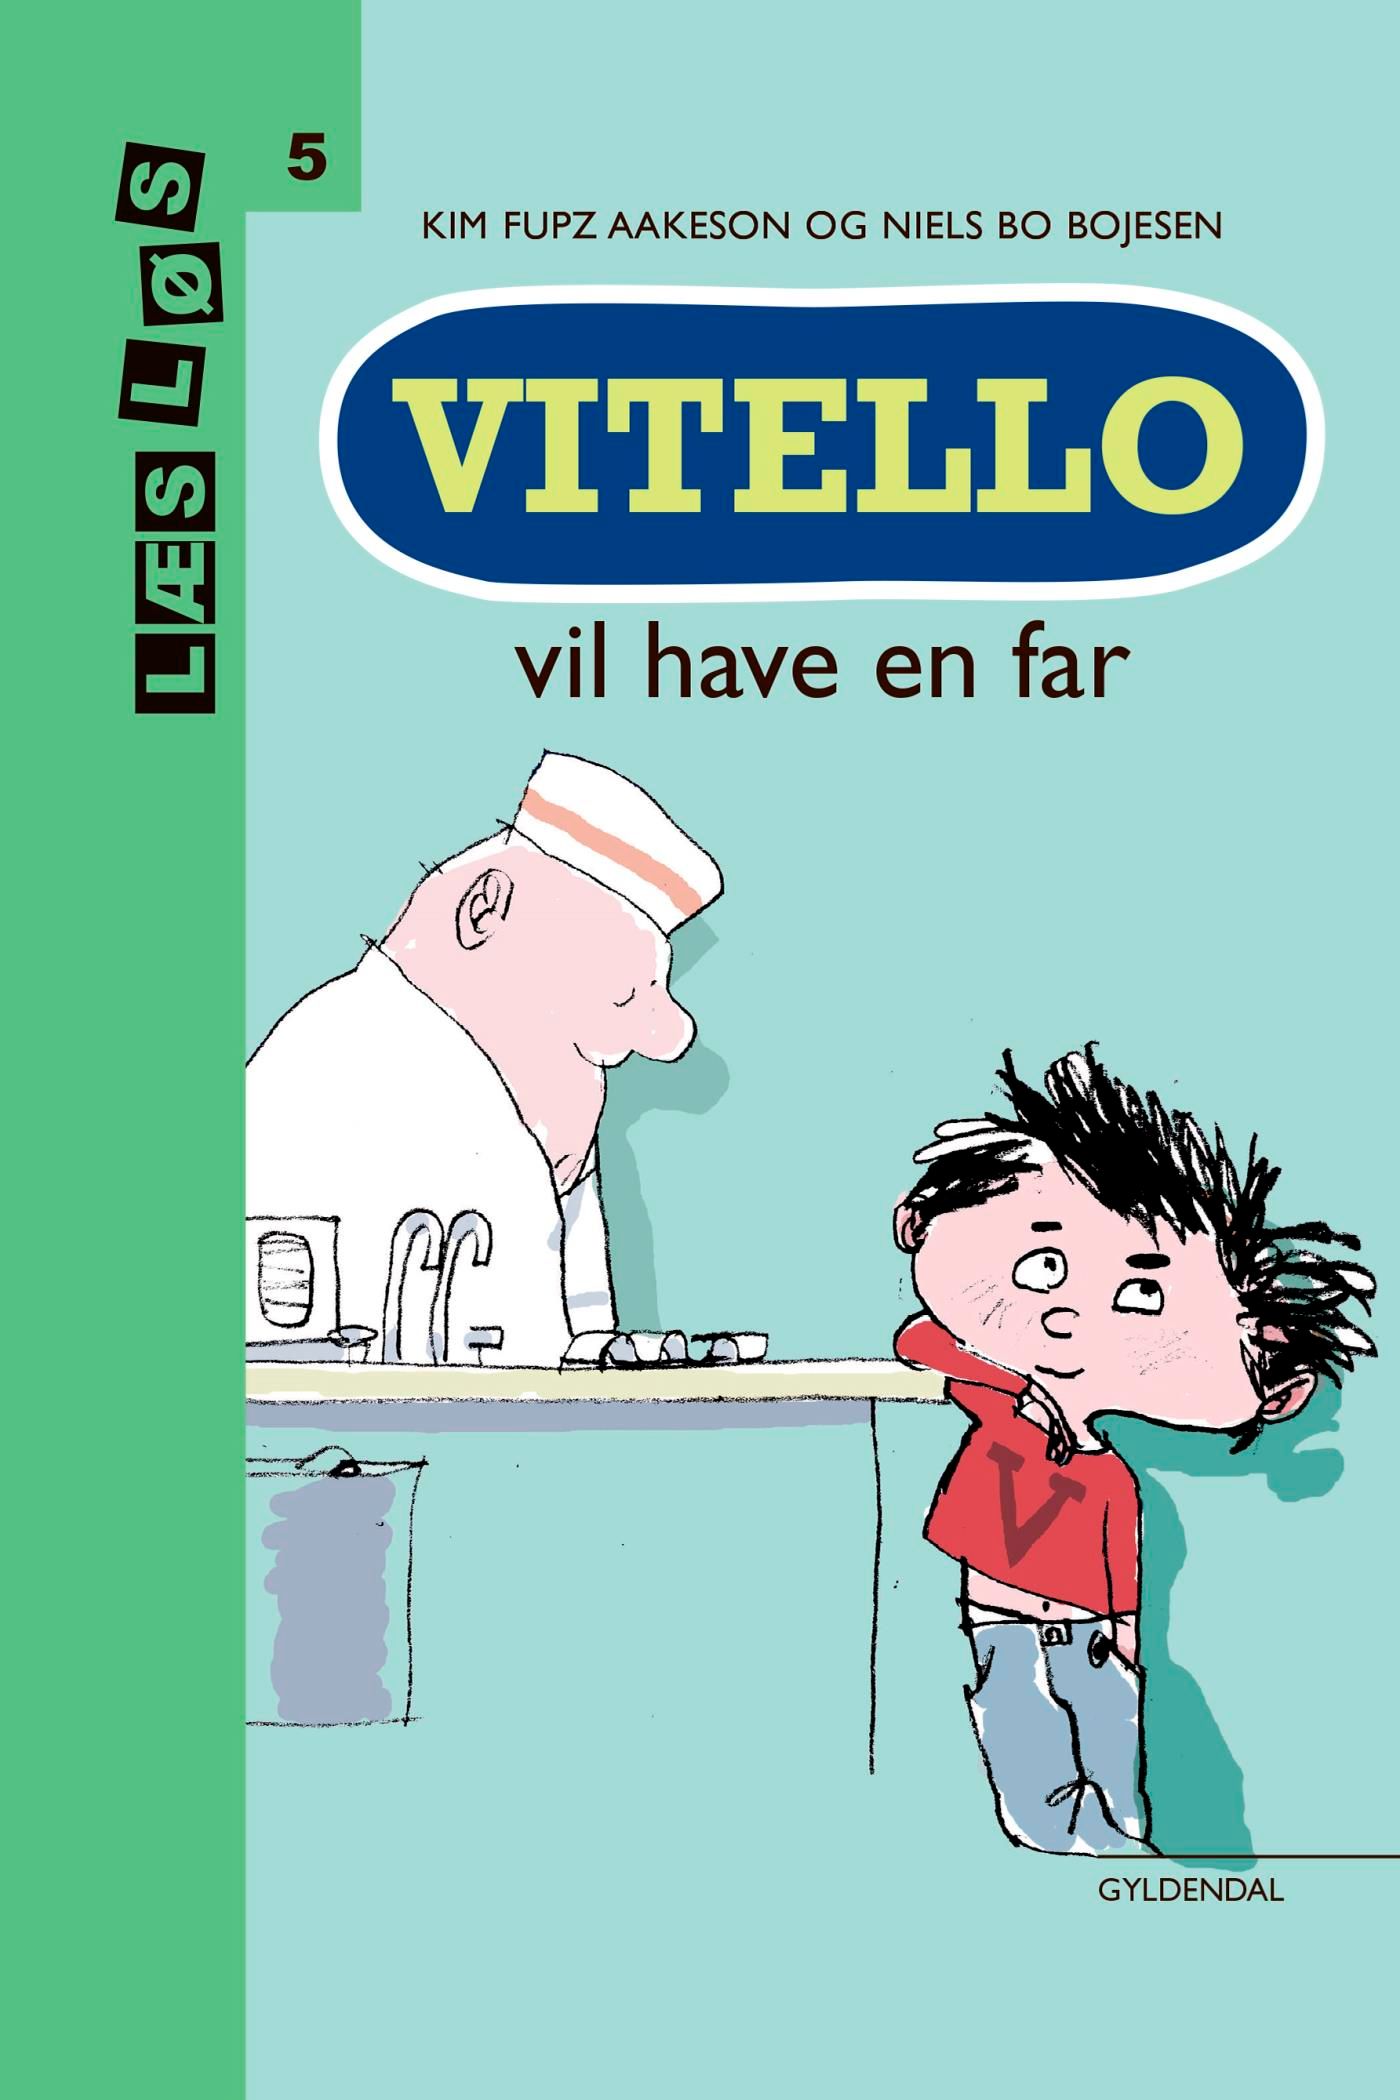 Vitello vil have en far, e-bok av Kim Fupz Aakeson